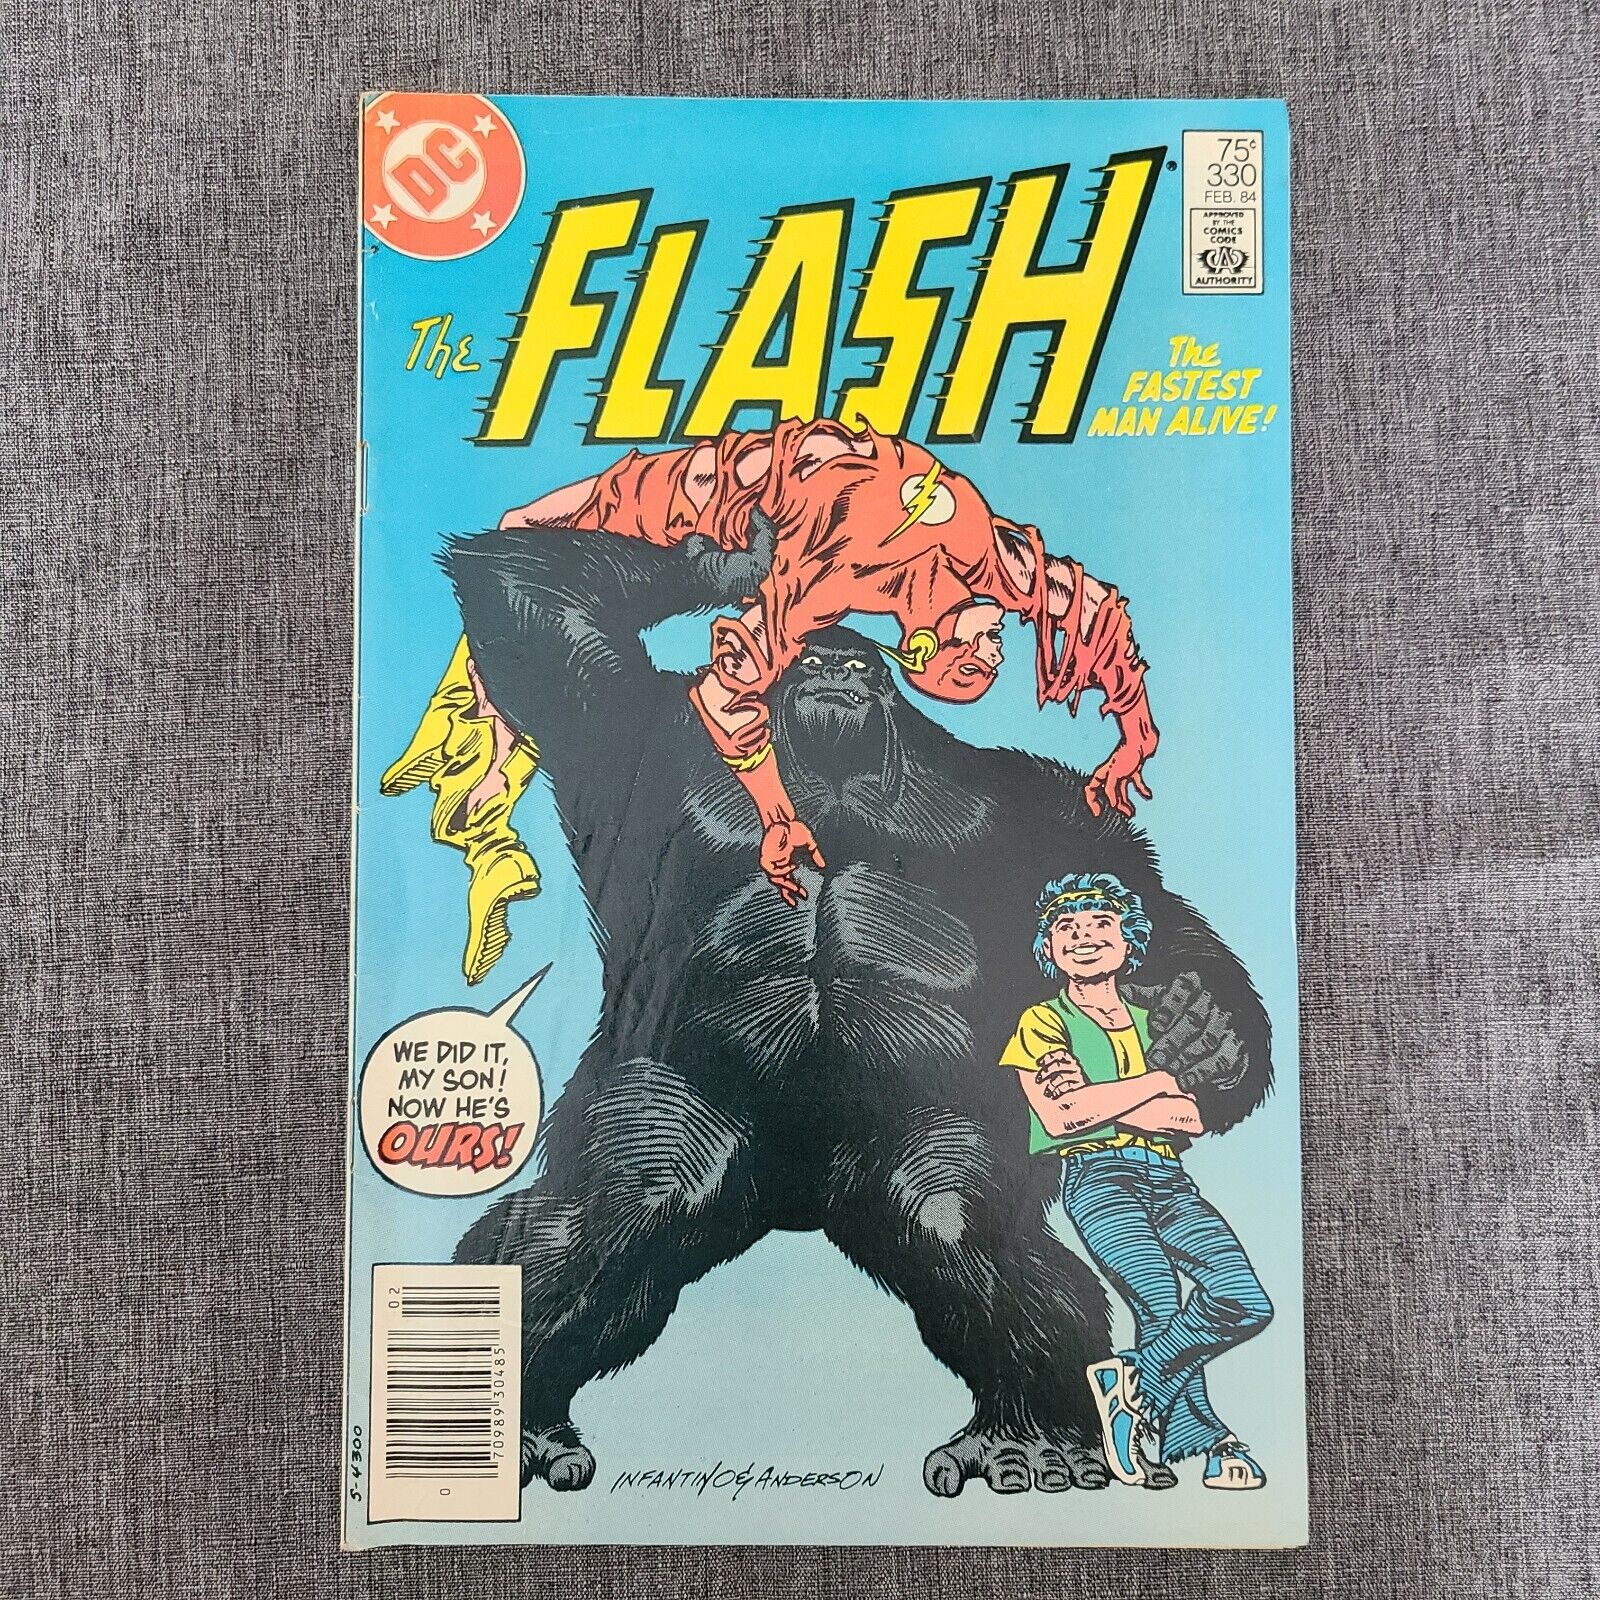 The Flash #330, Newsstand w/ Mark Jeweler Insert, DC 1983